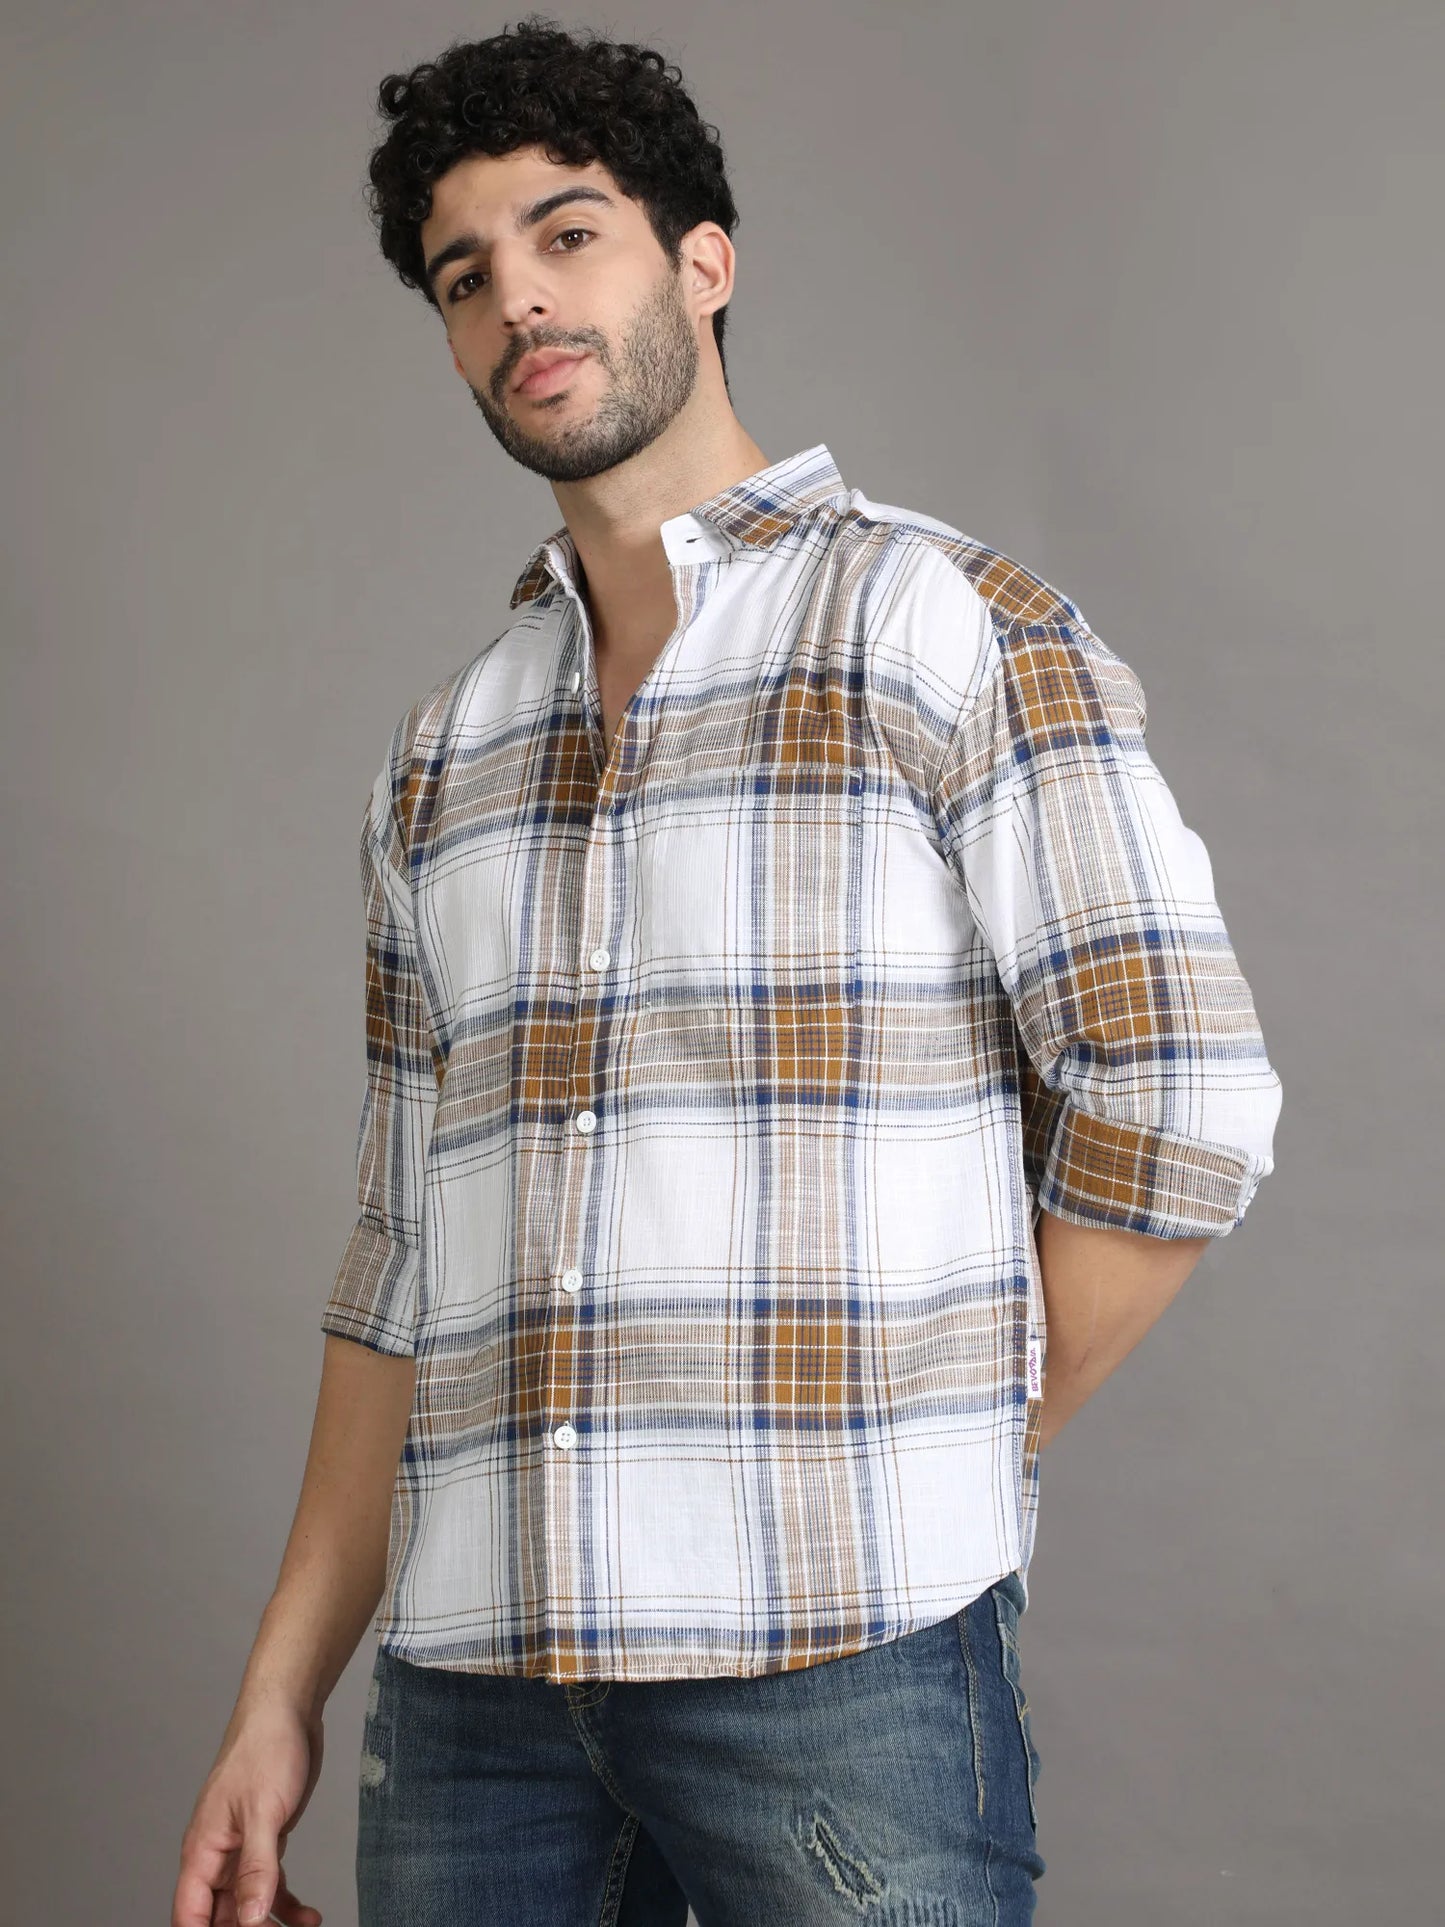 Brown Checkered Shirt for Men 